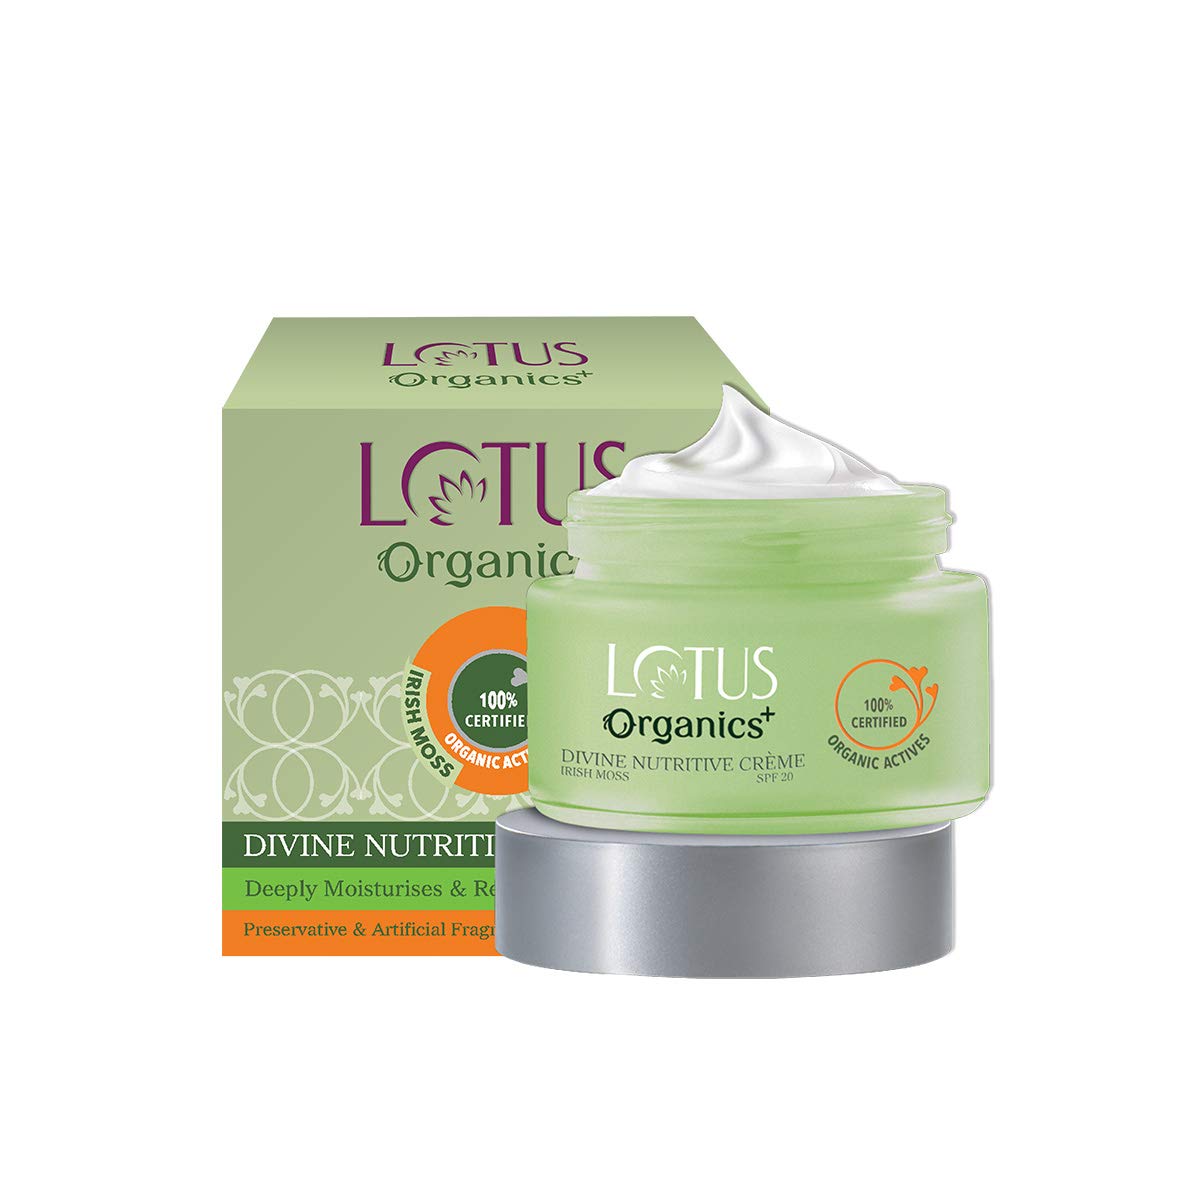 Lotus organics divine nutritive face crème